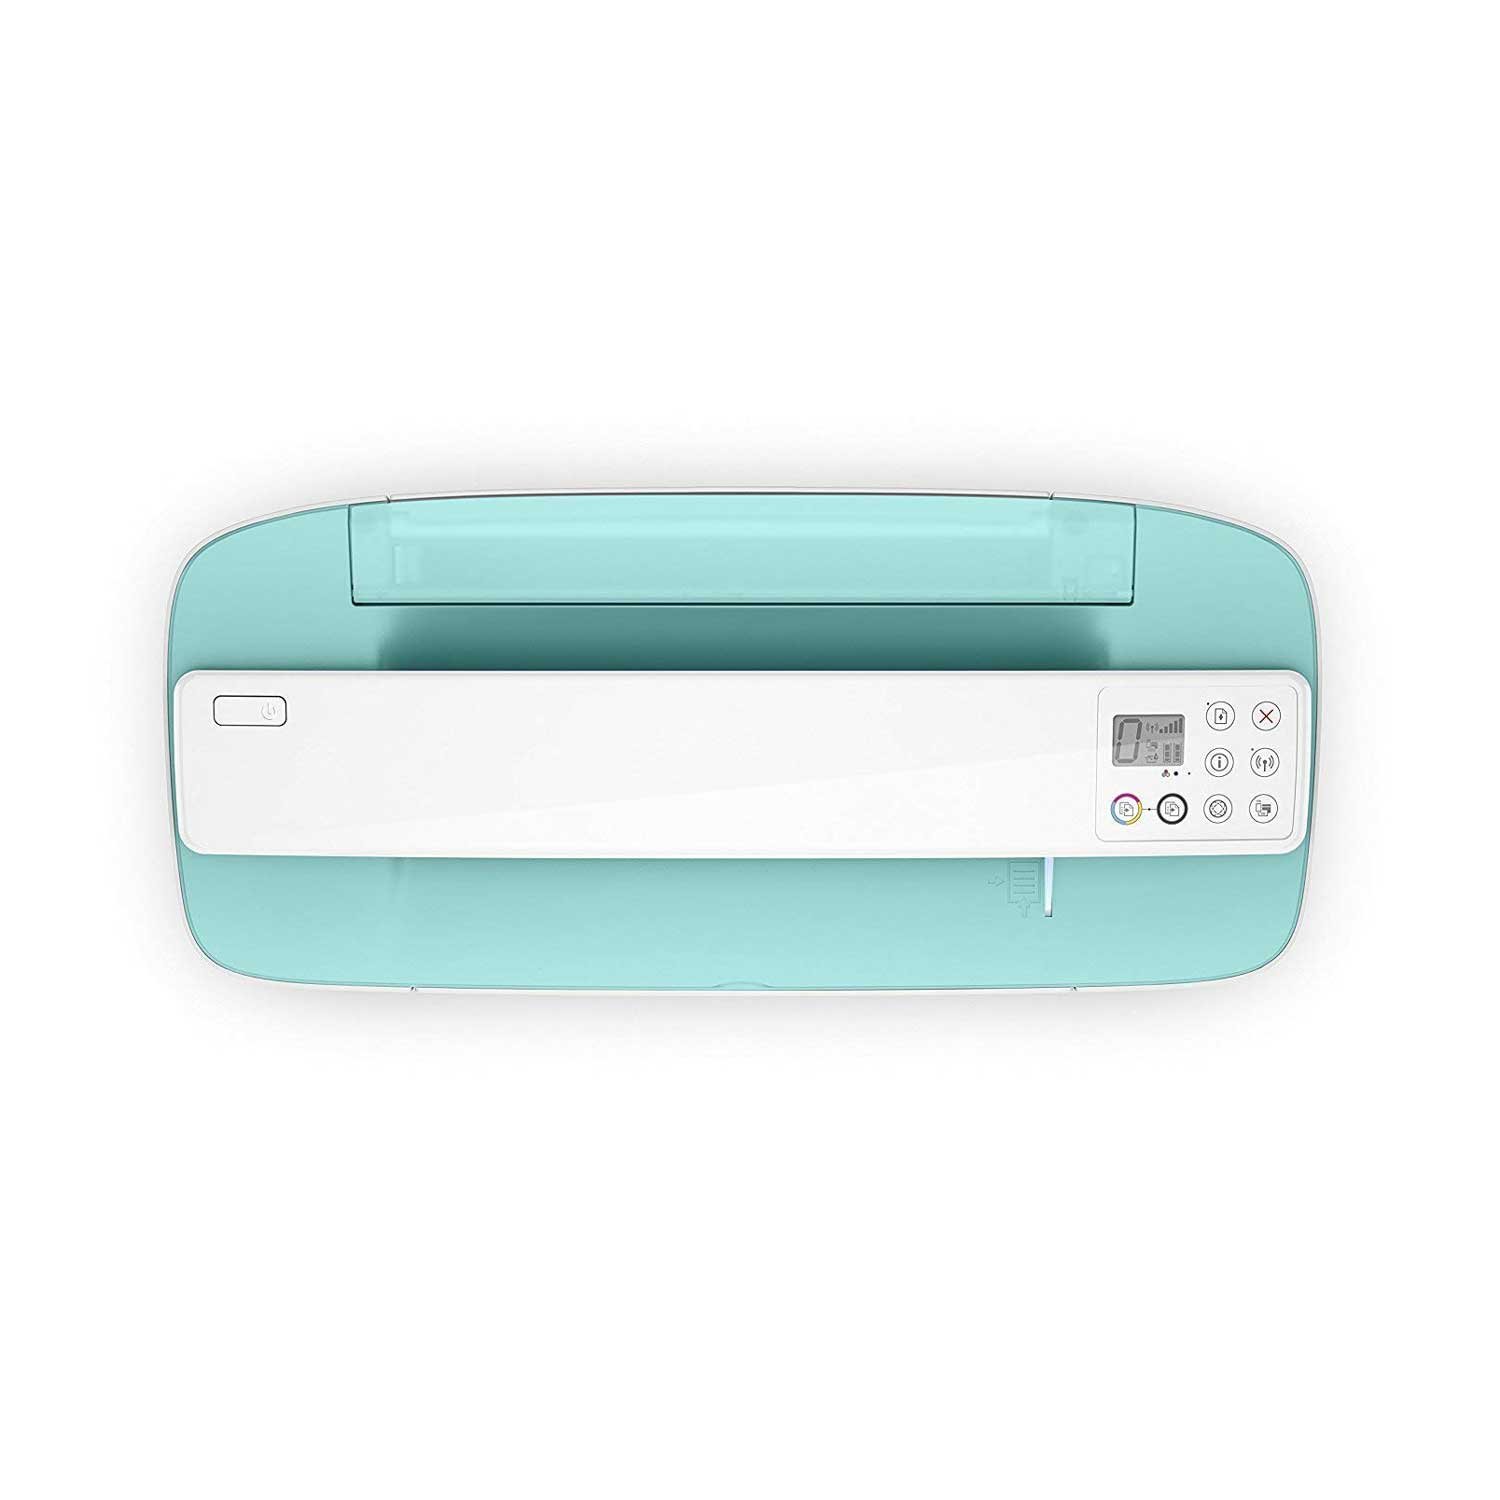 HP DeskJet 3755 All-in-One Wireless Printer